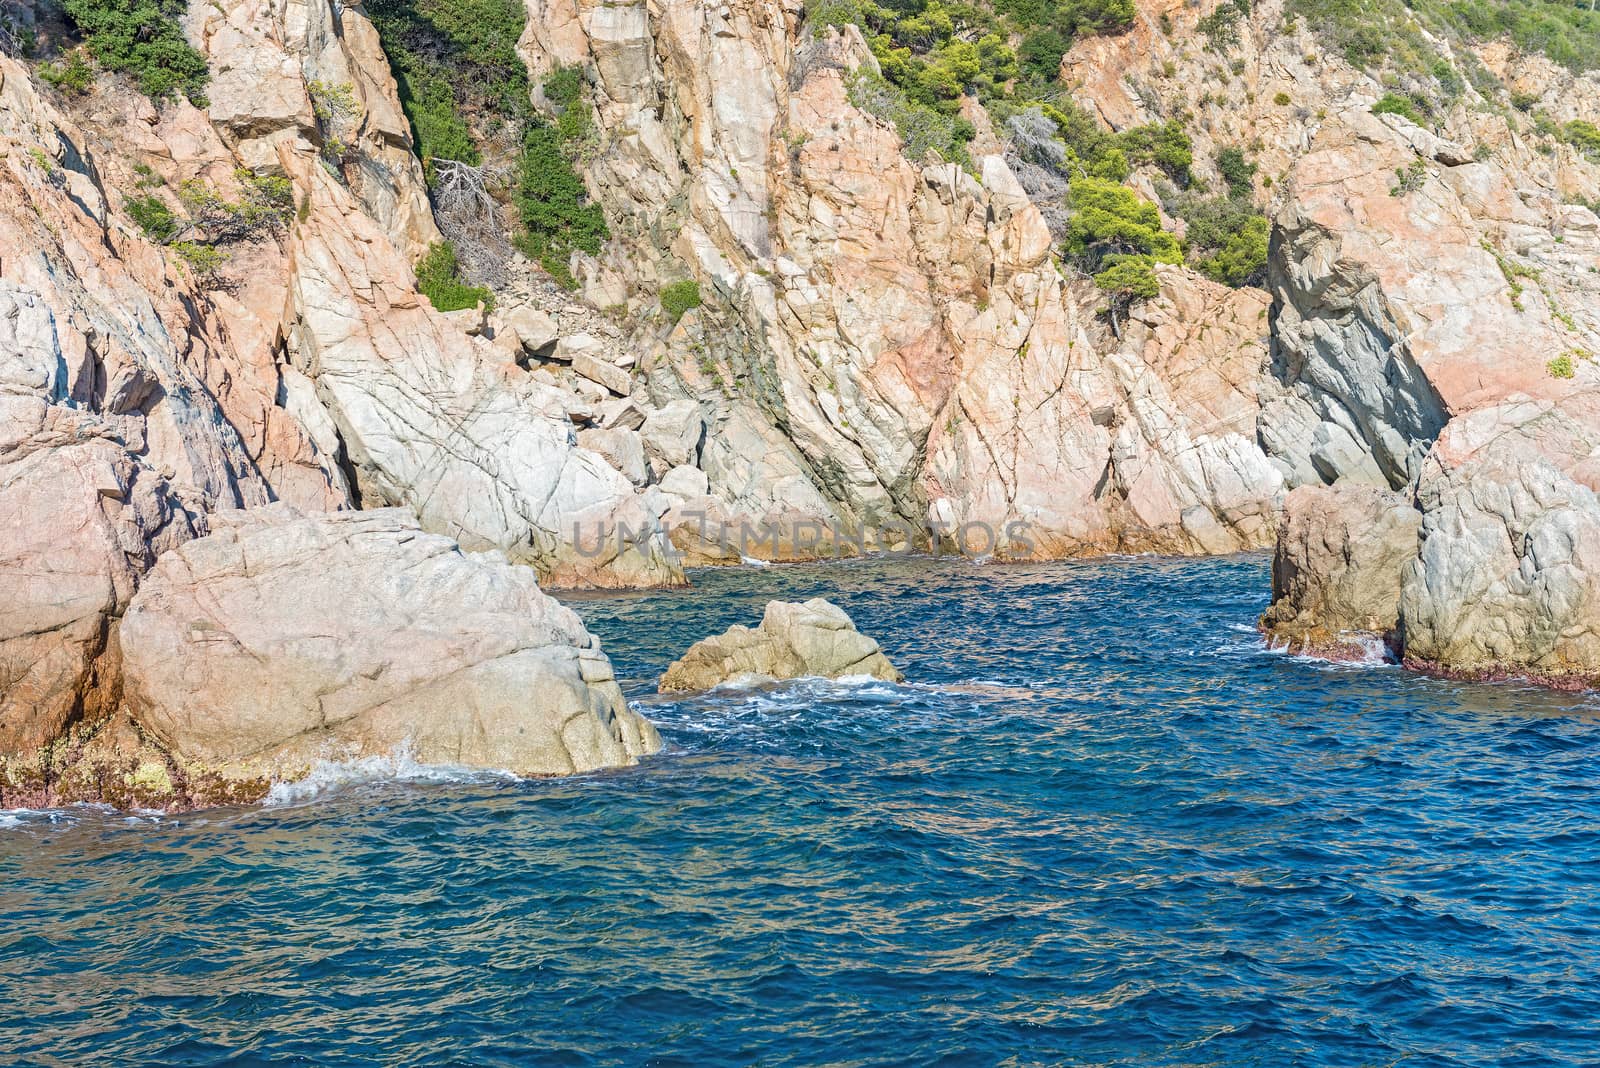 Detail cliffs of the Costa Brava coastline in Catalonia, Spain